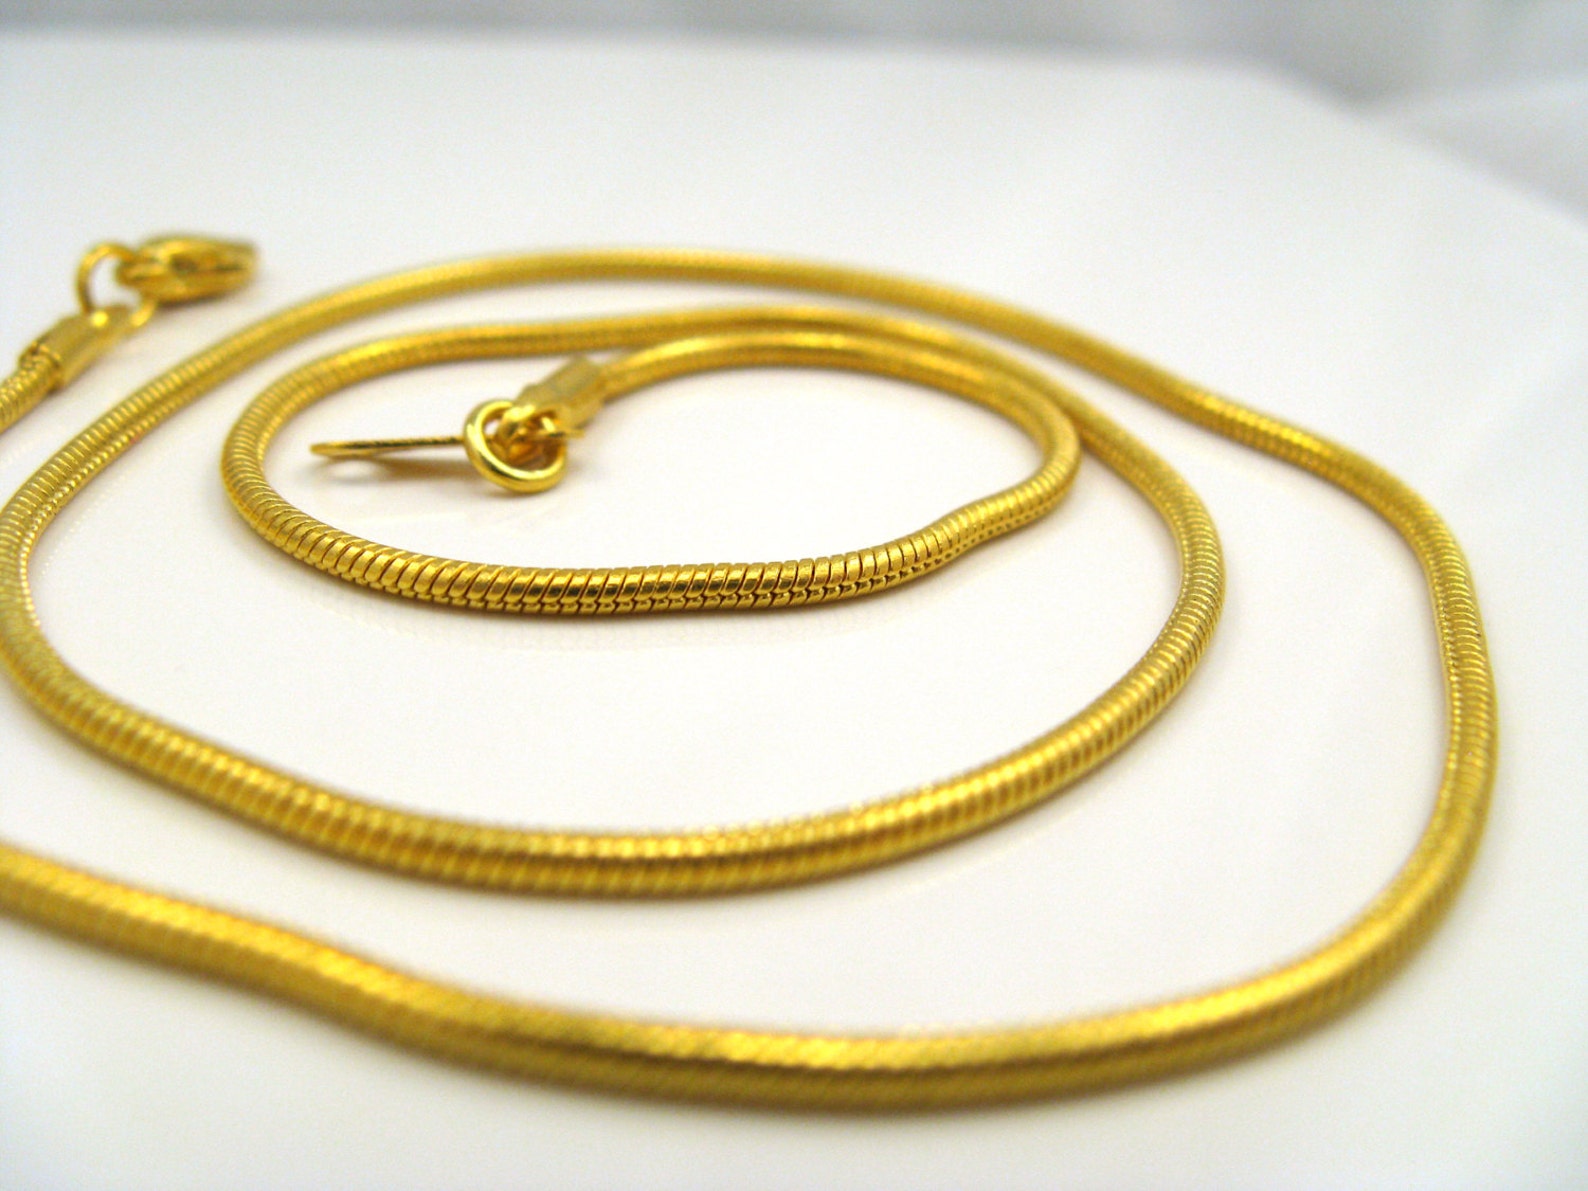 Gold-plated Snake Chain 16 Inch Length for Scrabble Tile - Etsy